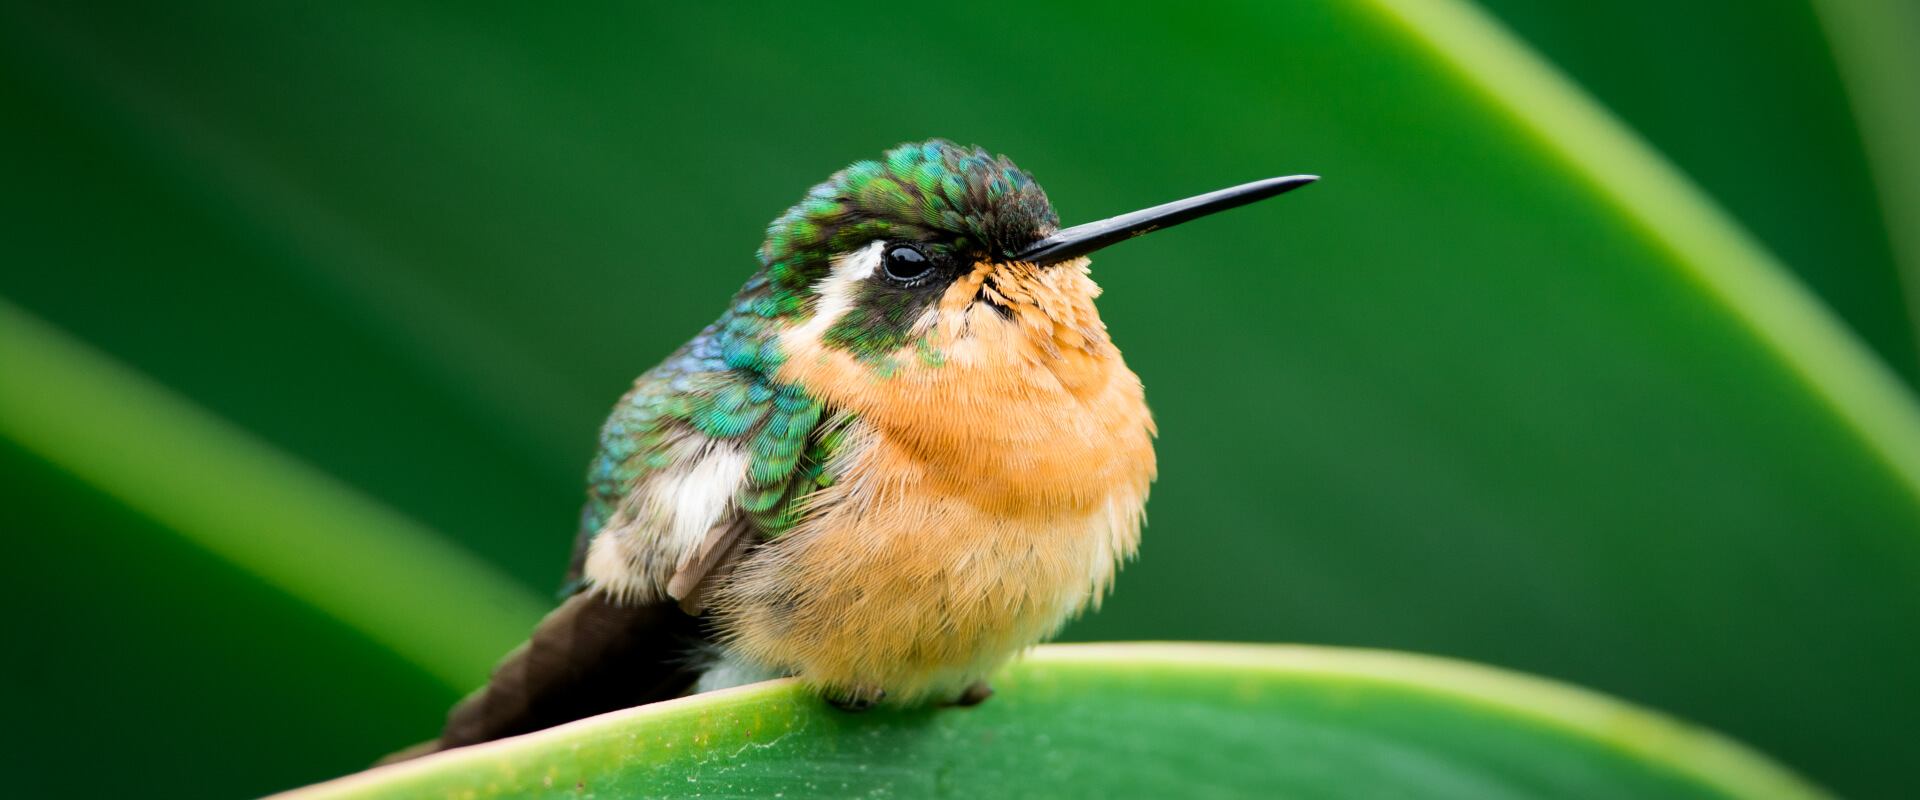 Monteverde Cloud Forest Biological Reserve Birdwatching Tour | Costa Rica Jade Tours